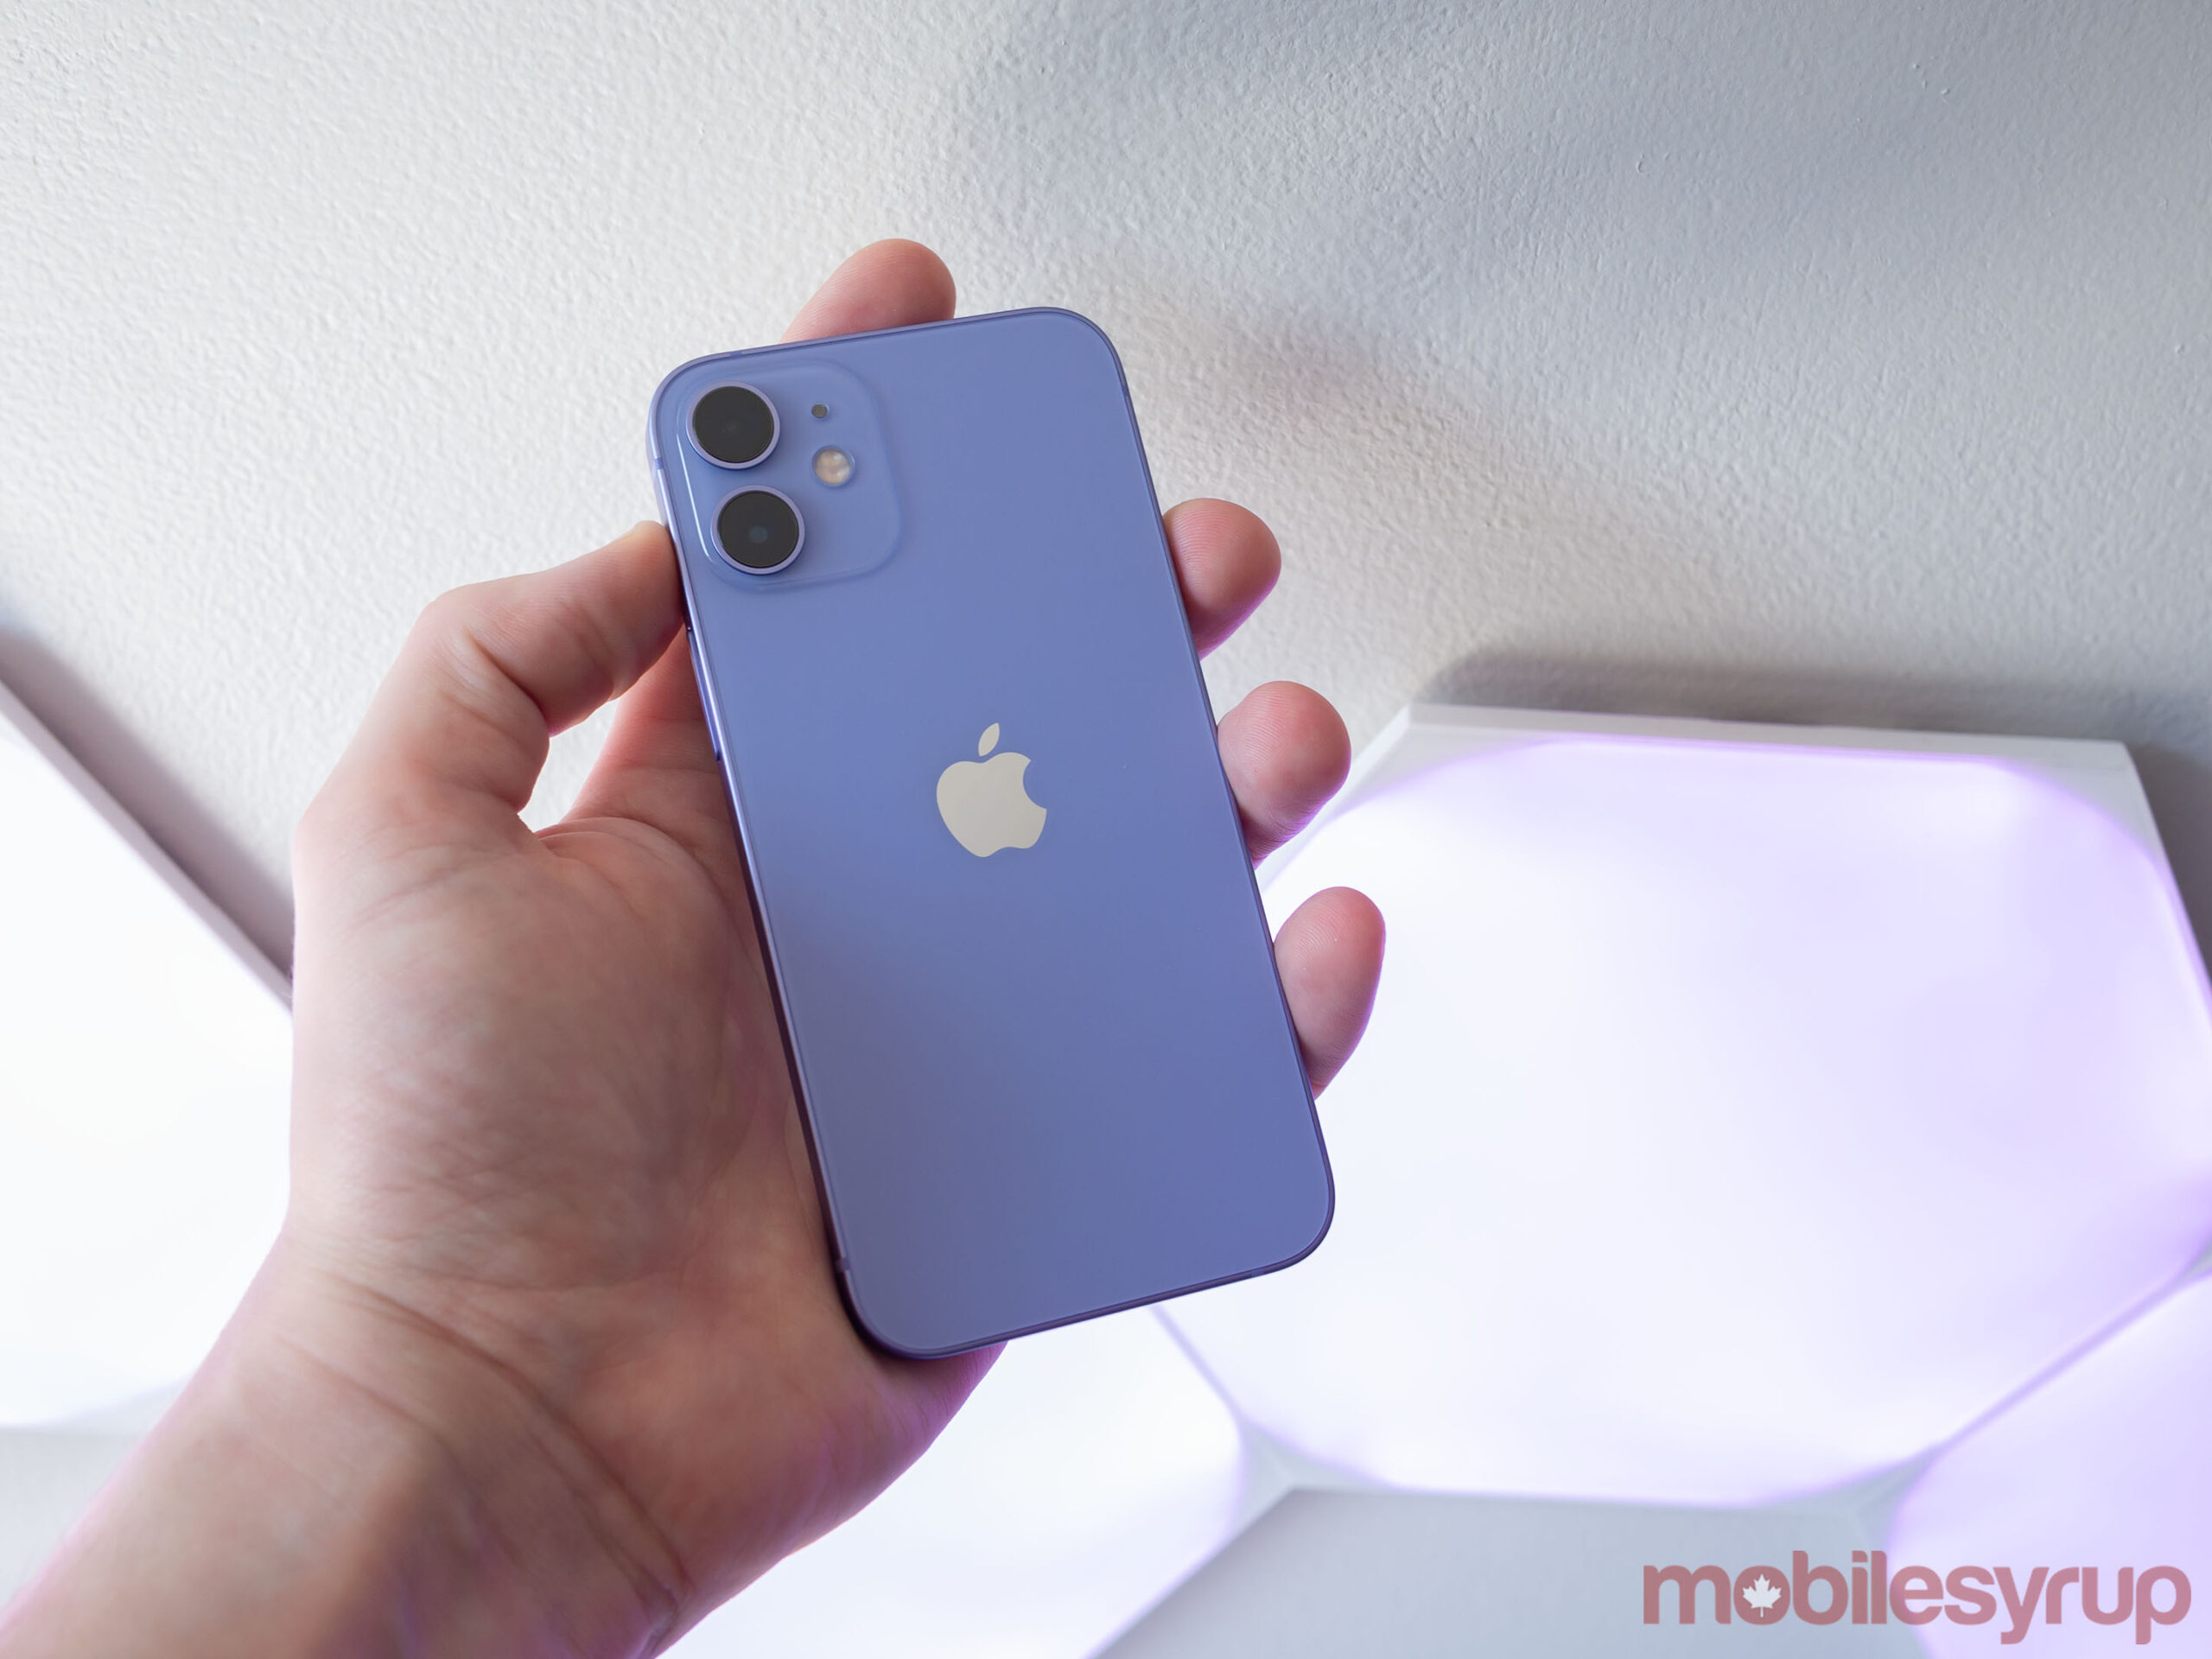 Here's Apple's 'Purple' iPhone 12 mini